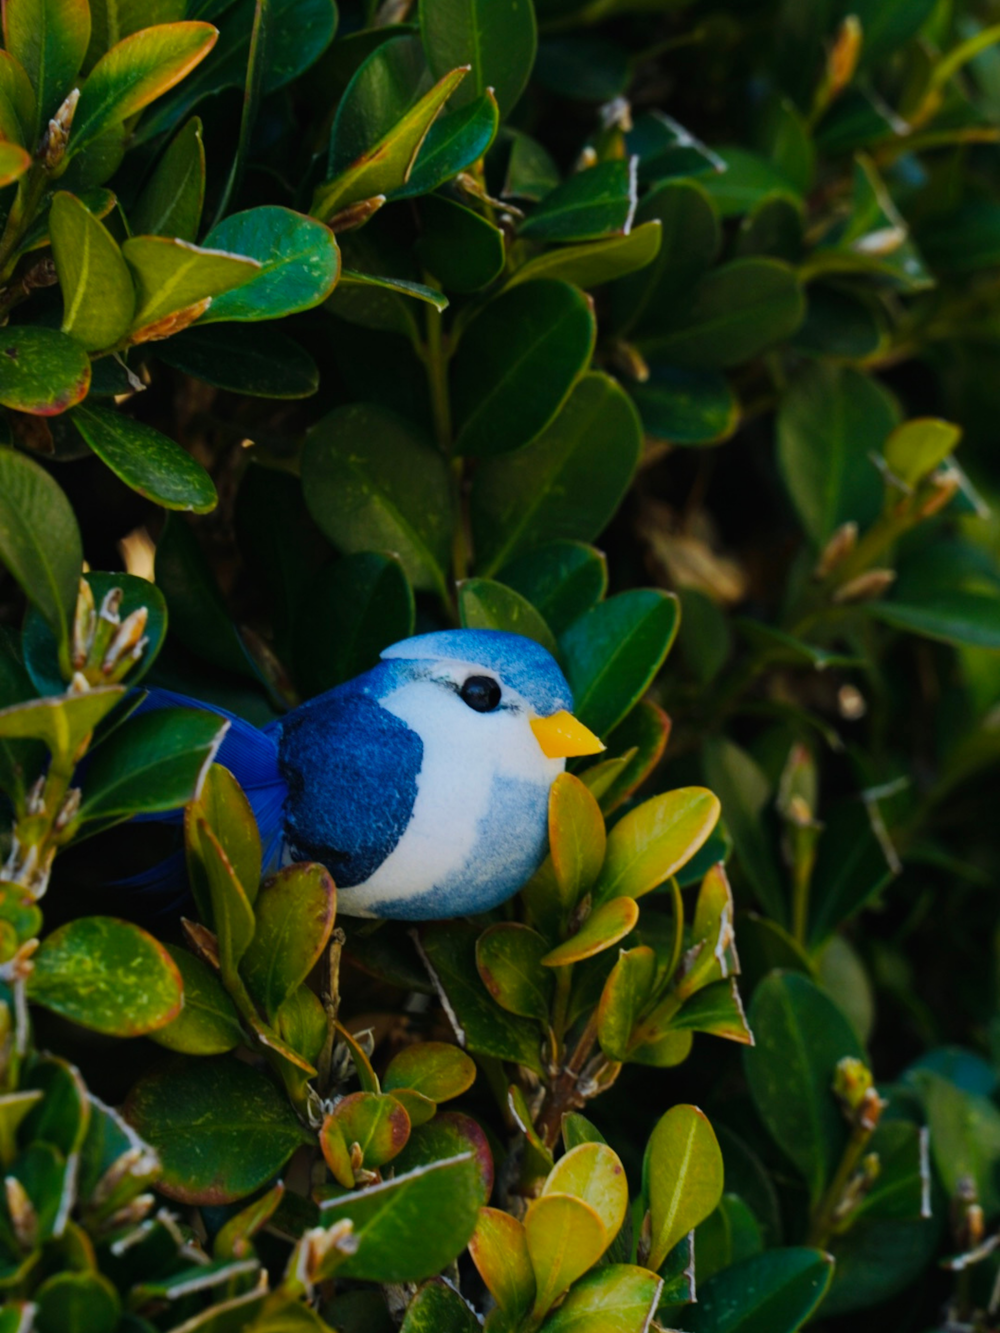 a blue bird sitting on top of a green bush